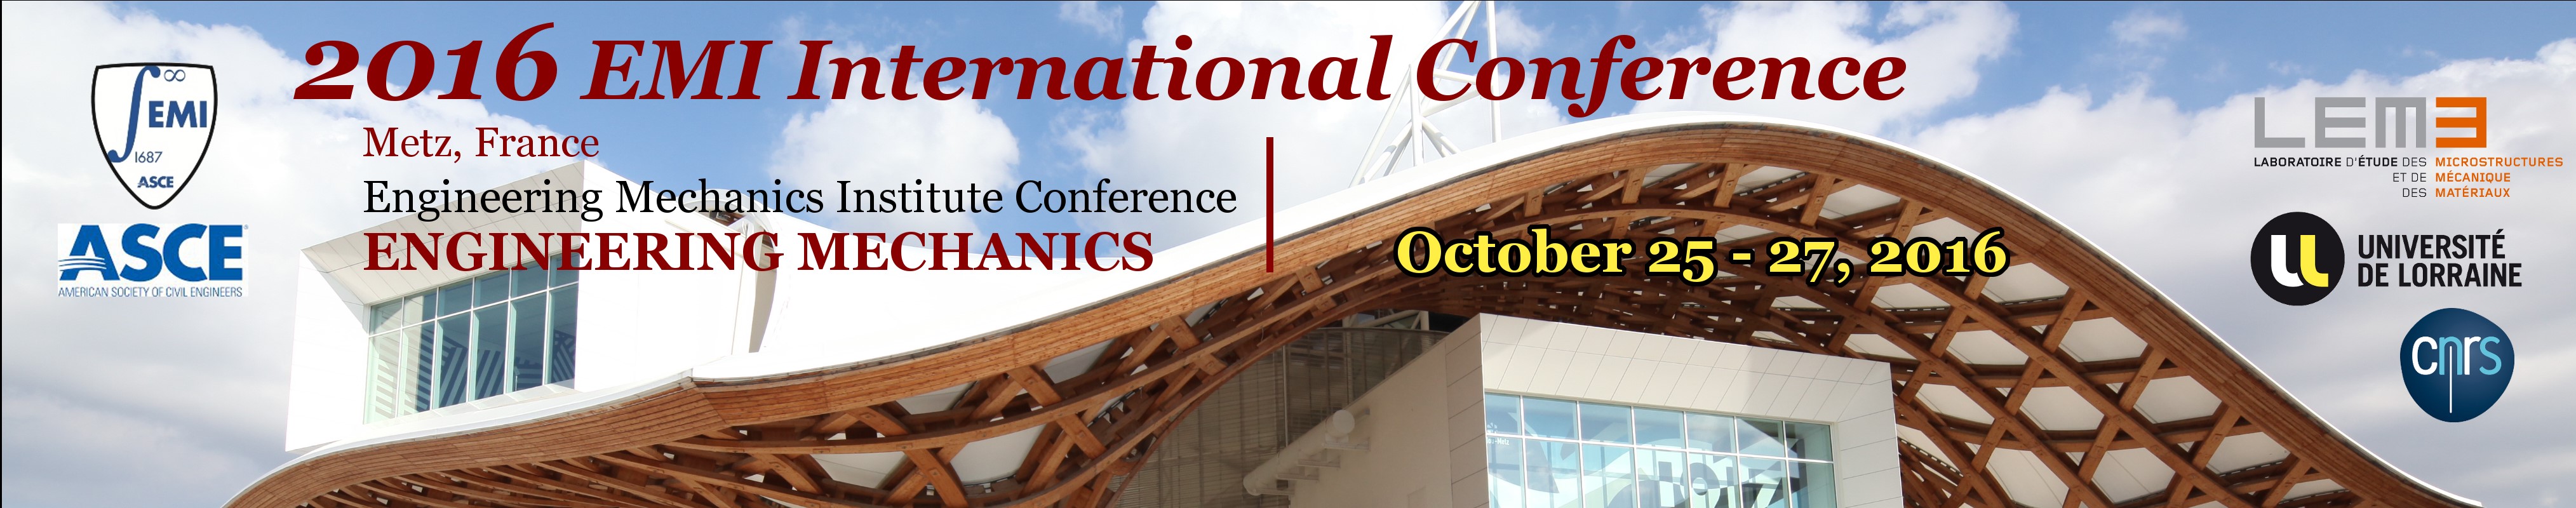 EMI - 2016 International Conference